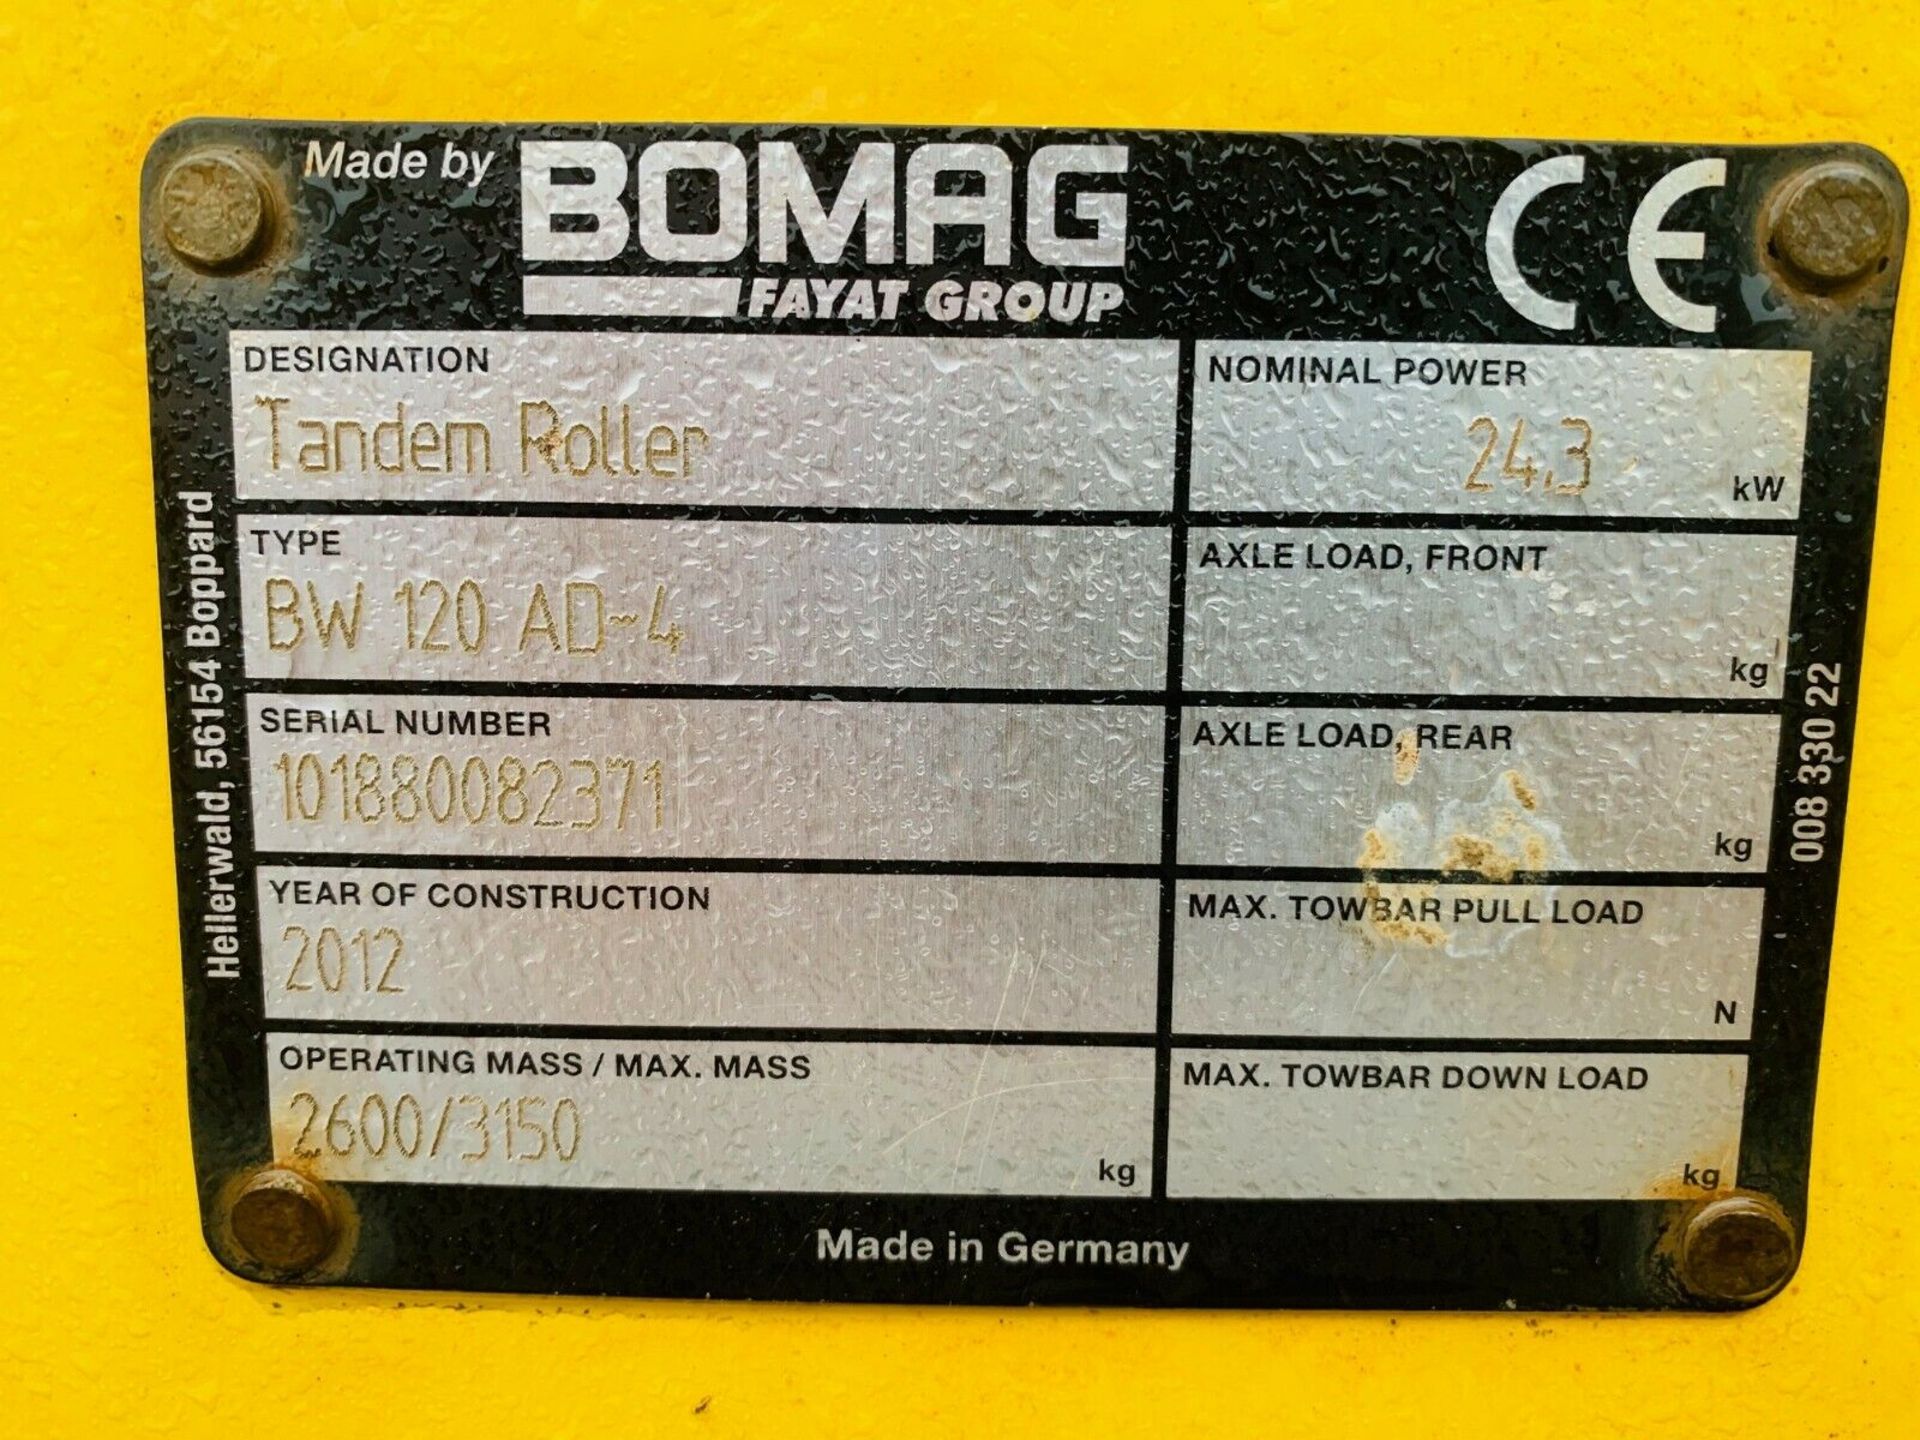 Bomag BW 120 AD-4 Tandem Roller - Image 9 of 10